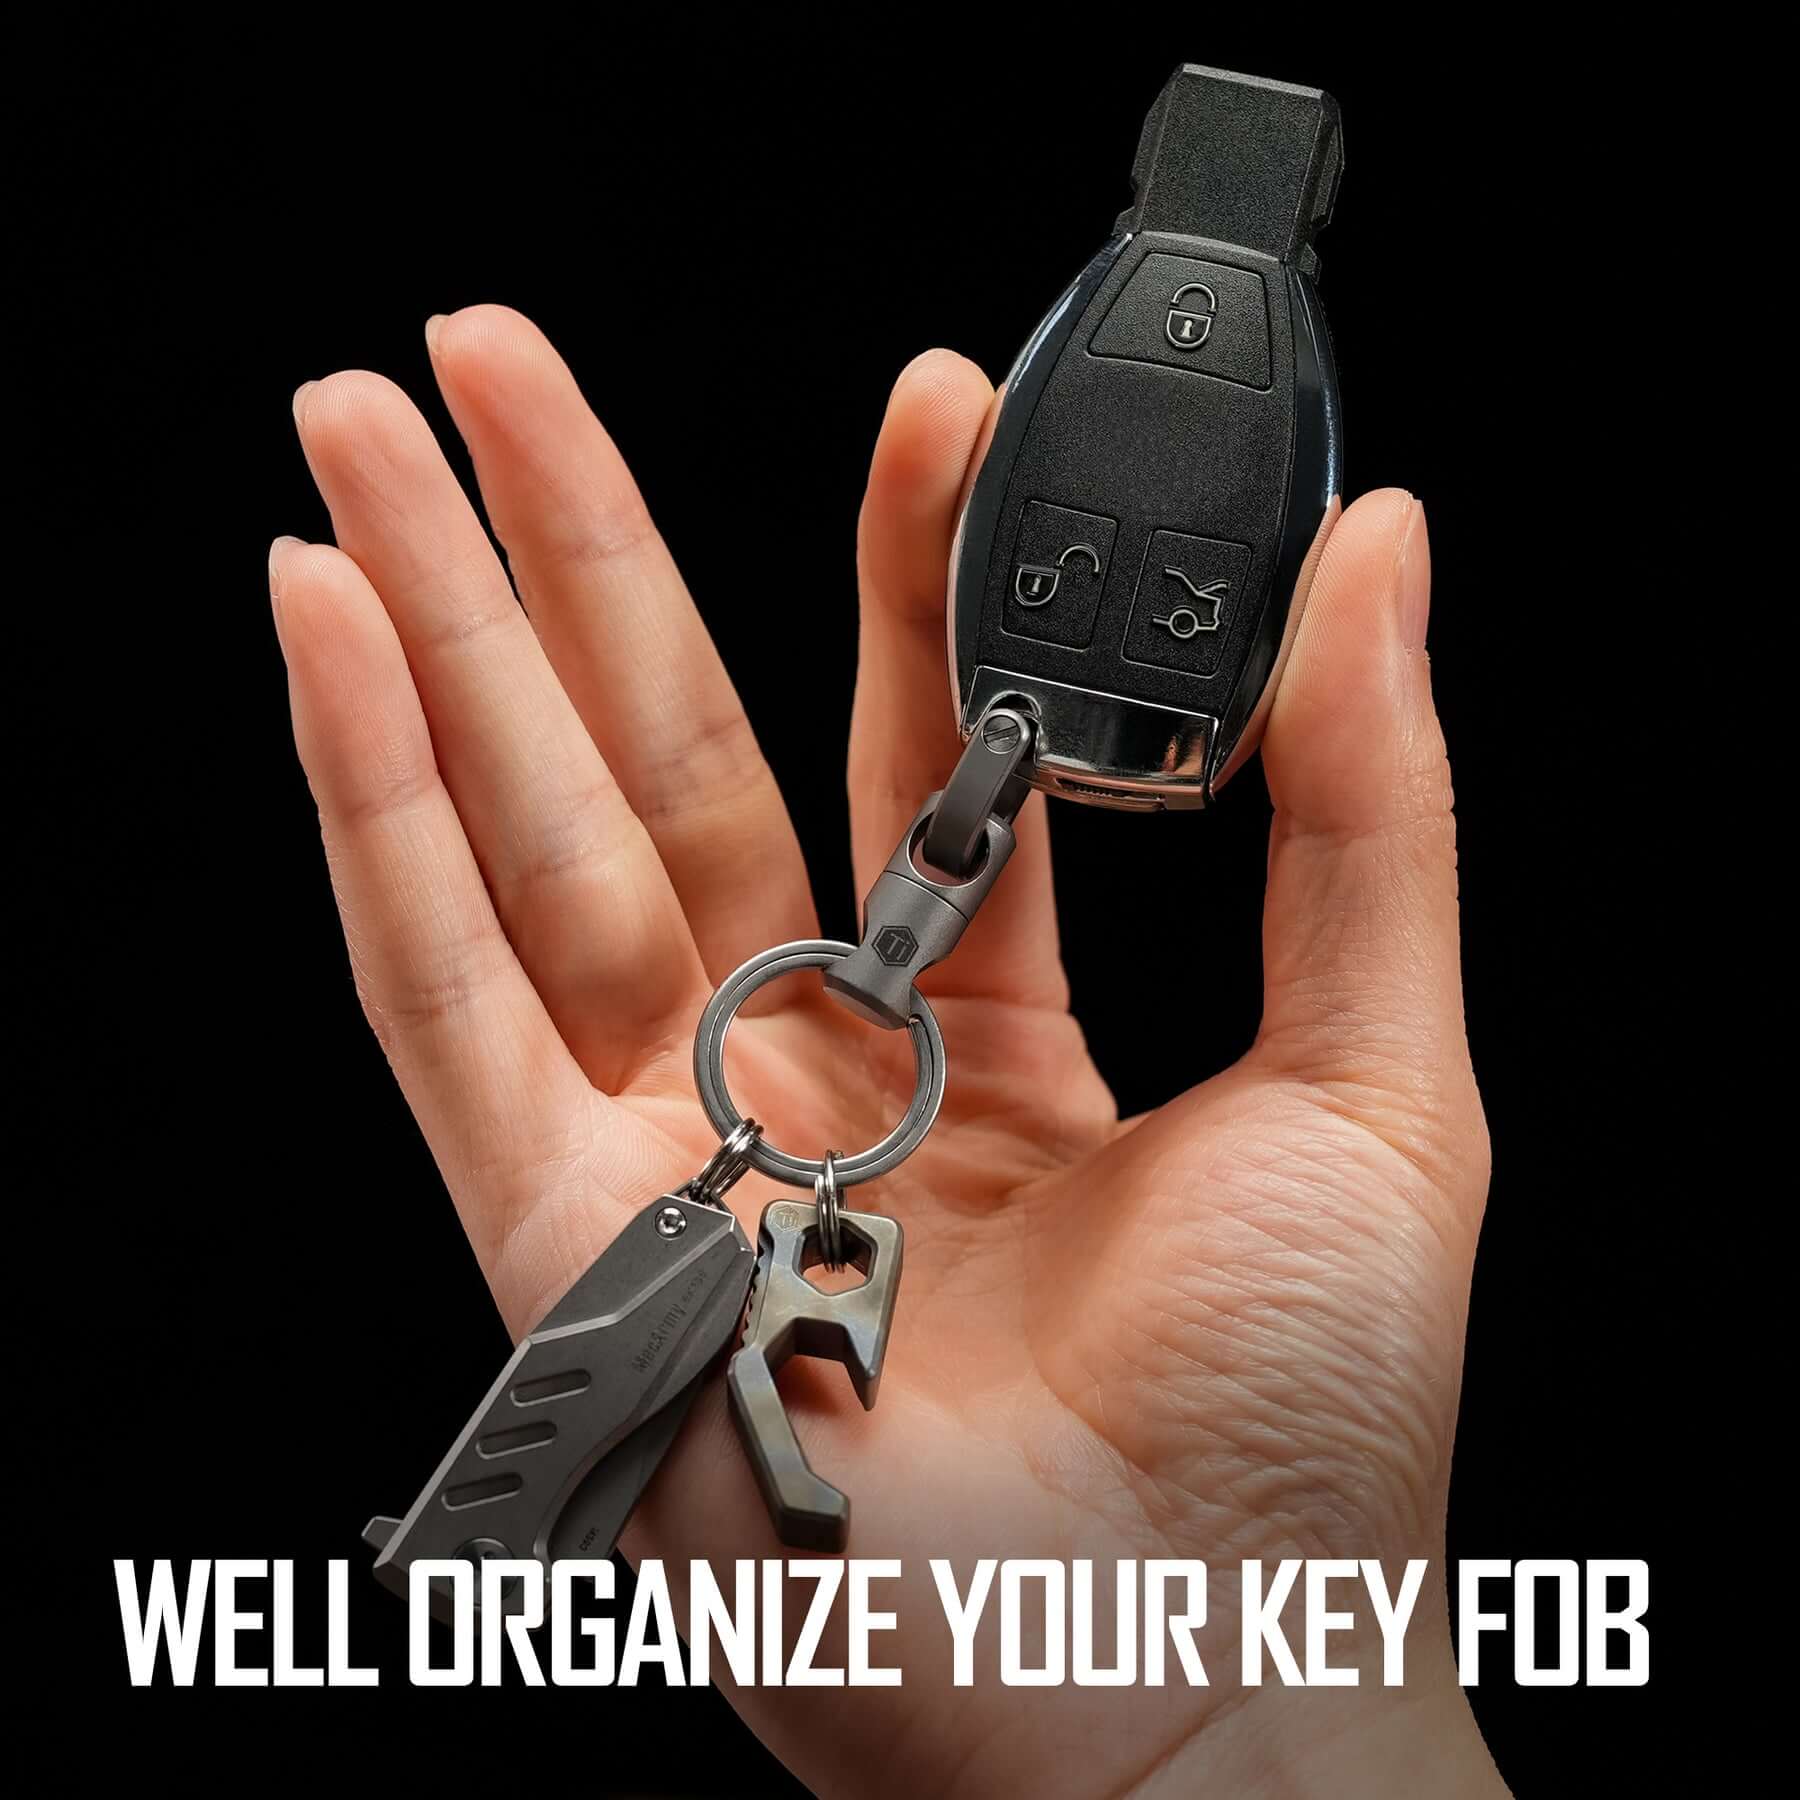 KeyUnity KM13 Titanium Alloy Keychain Key Ring Connector